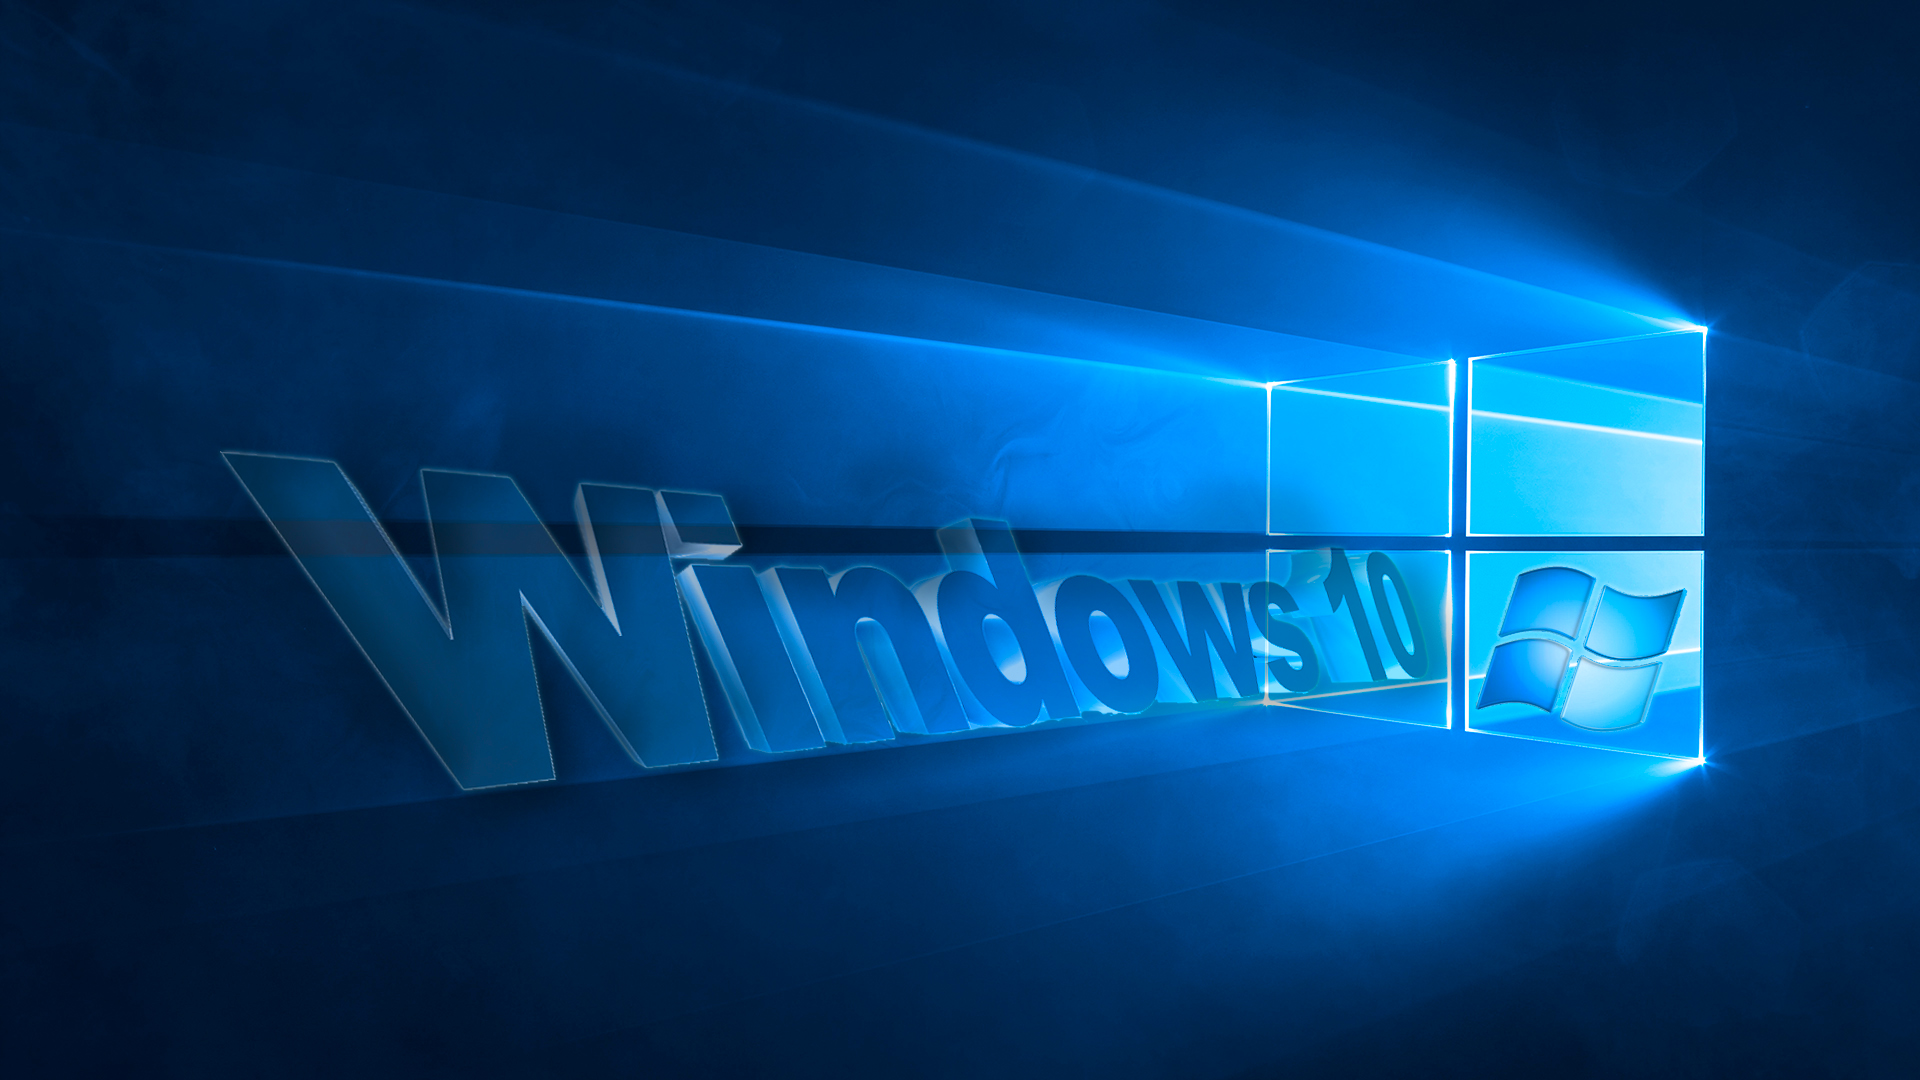 Technology Windows 10 1920x1080